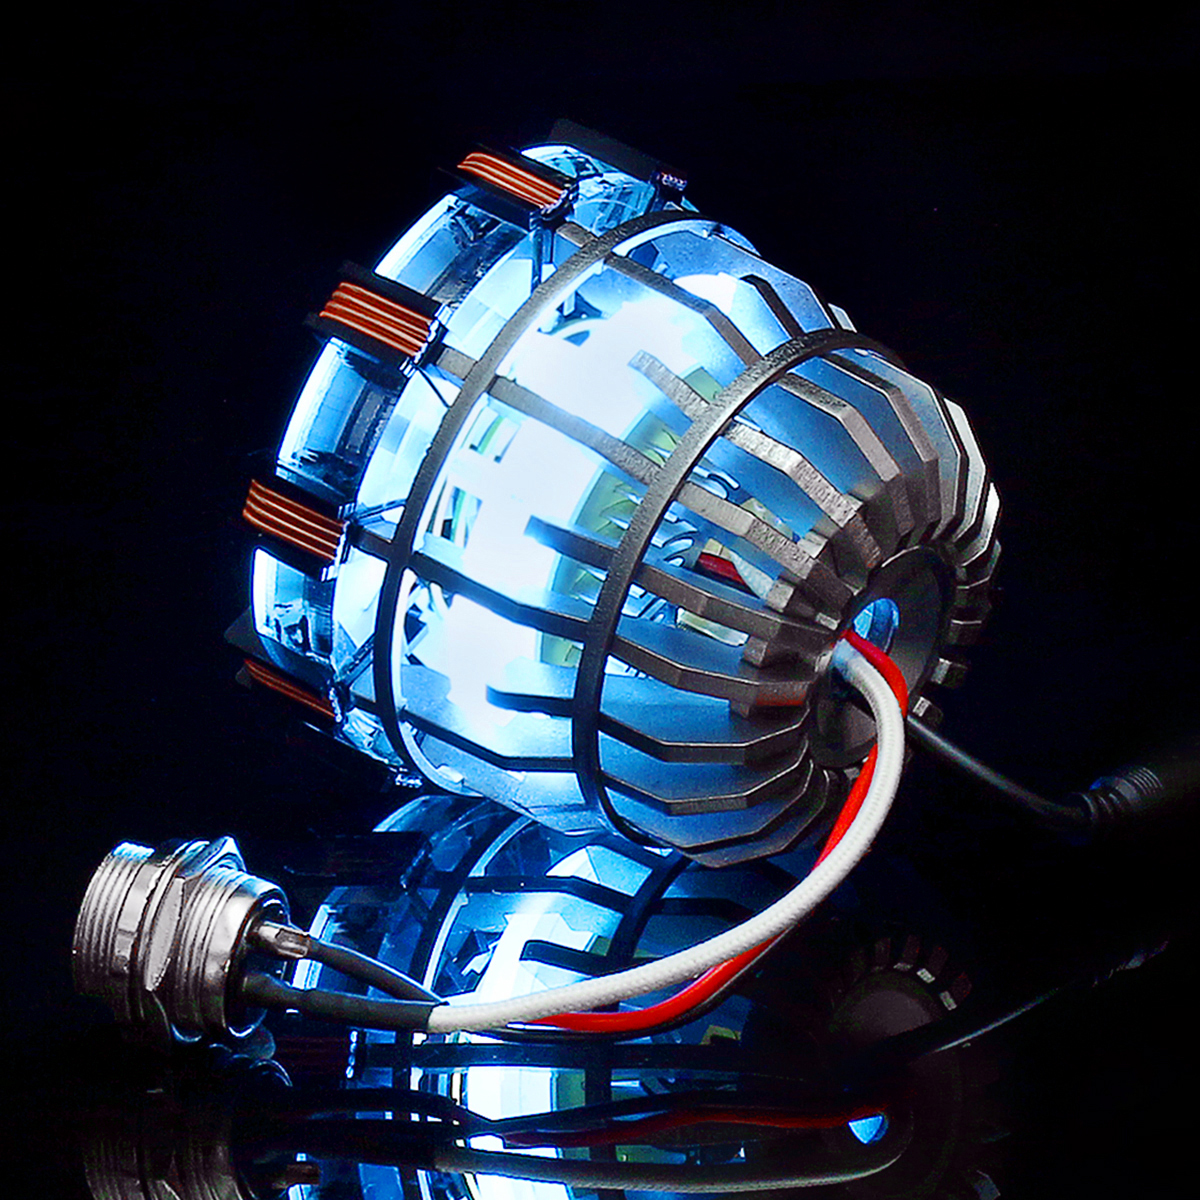 MK2 Tony DIY Arc Reactor Lamp Stainless Steel Kit Illuminant LED Flash Light Set 58